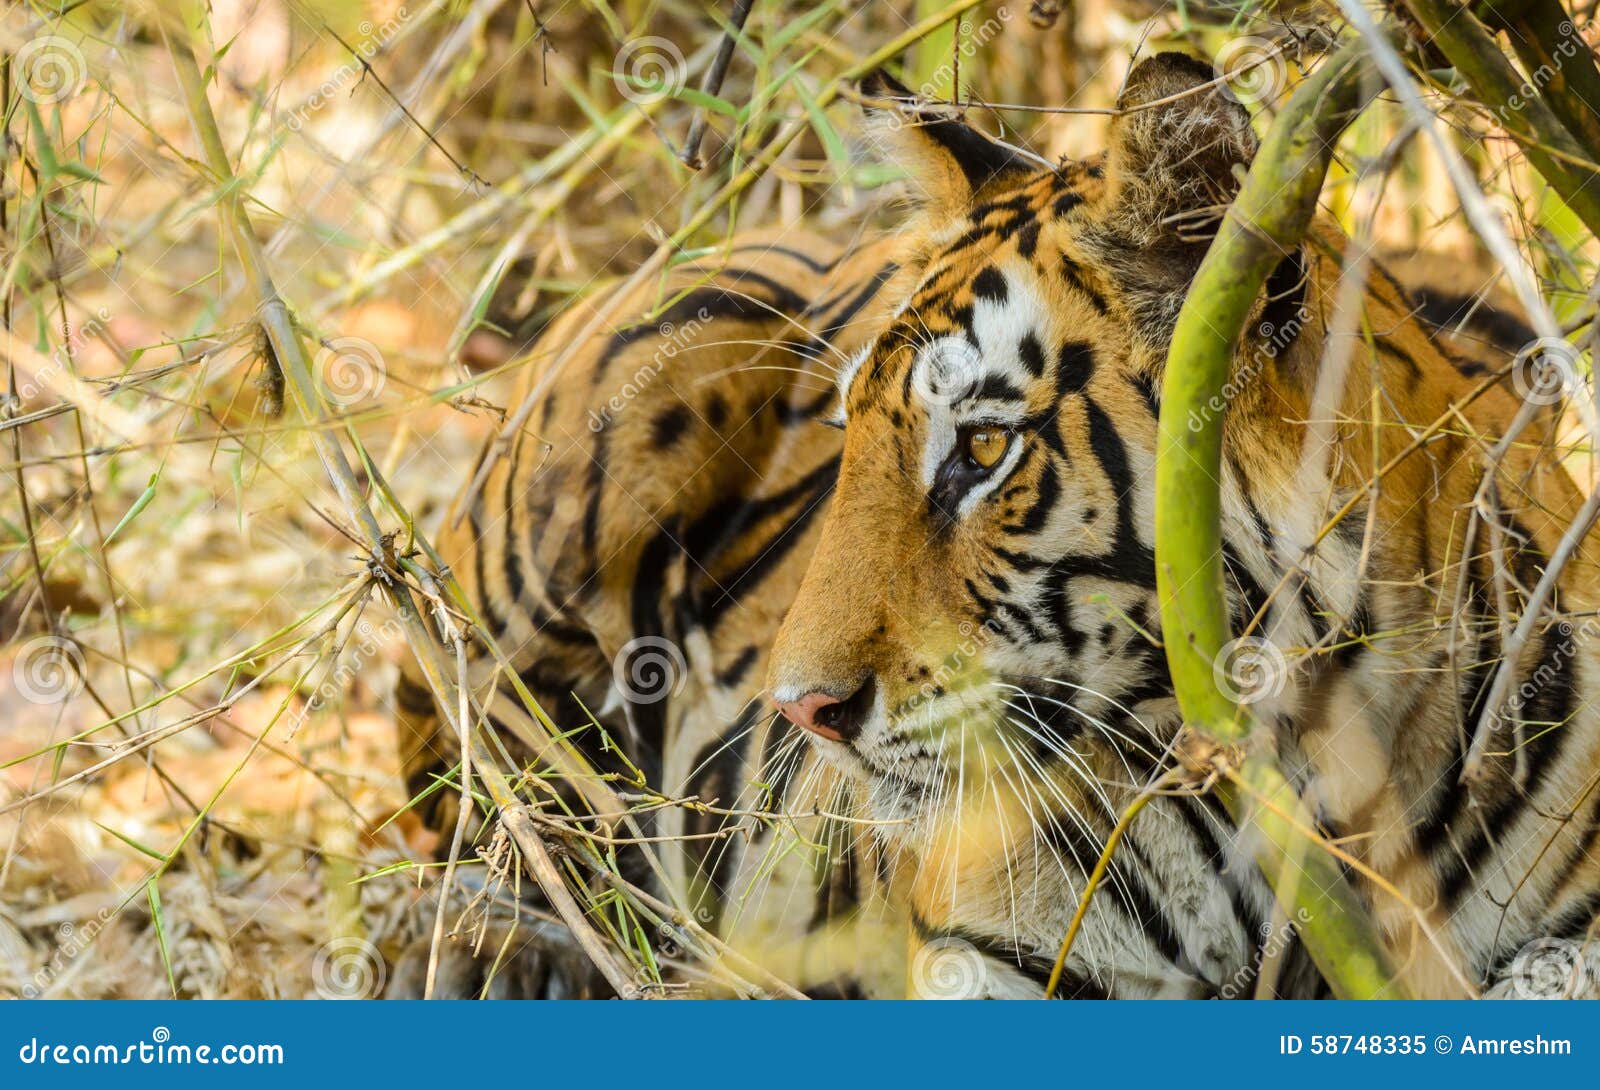 bengal tigress resting